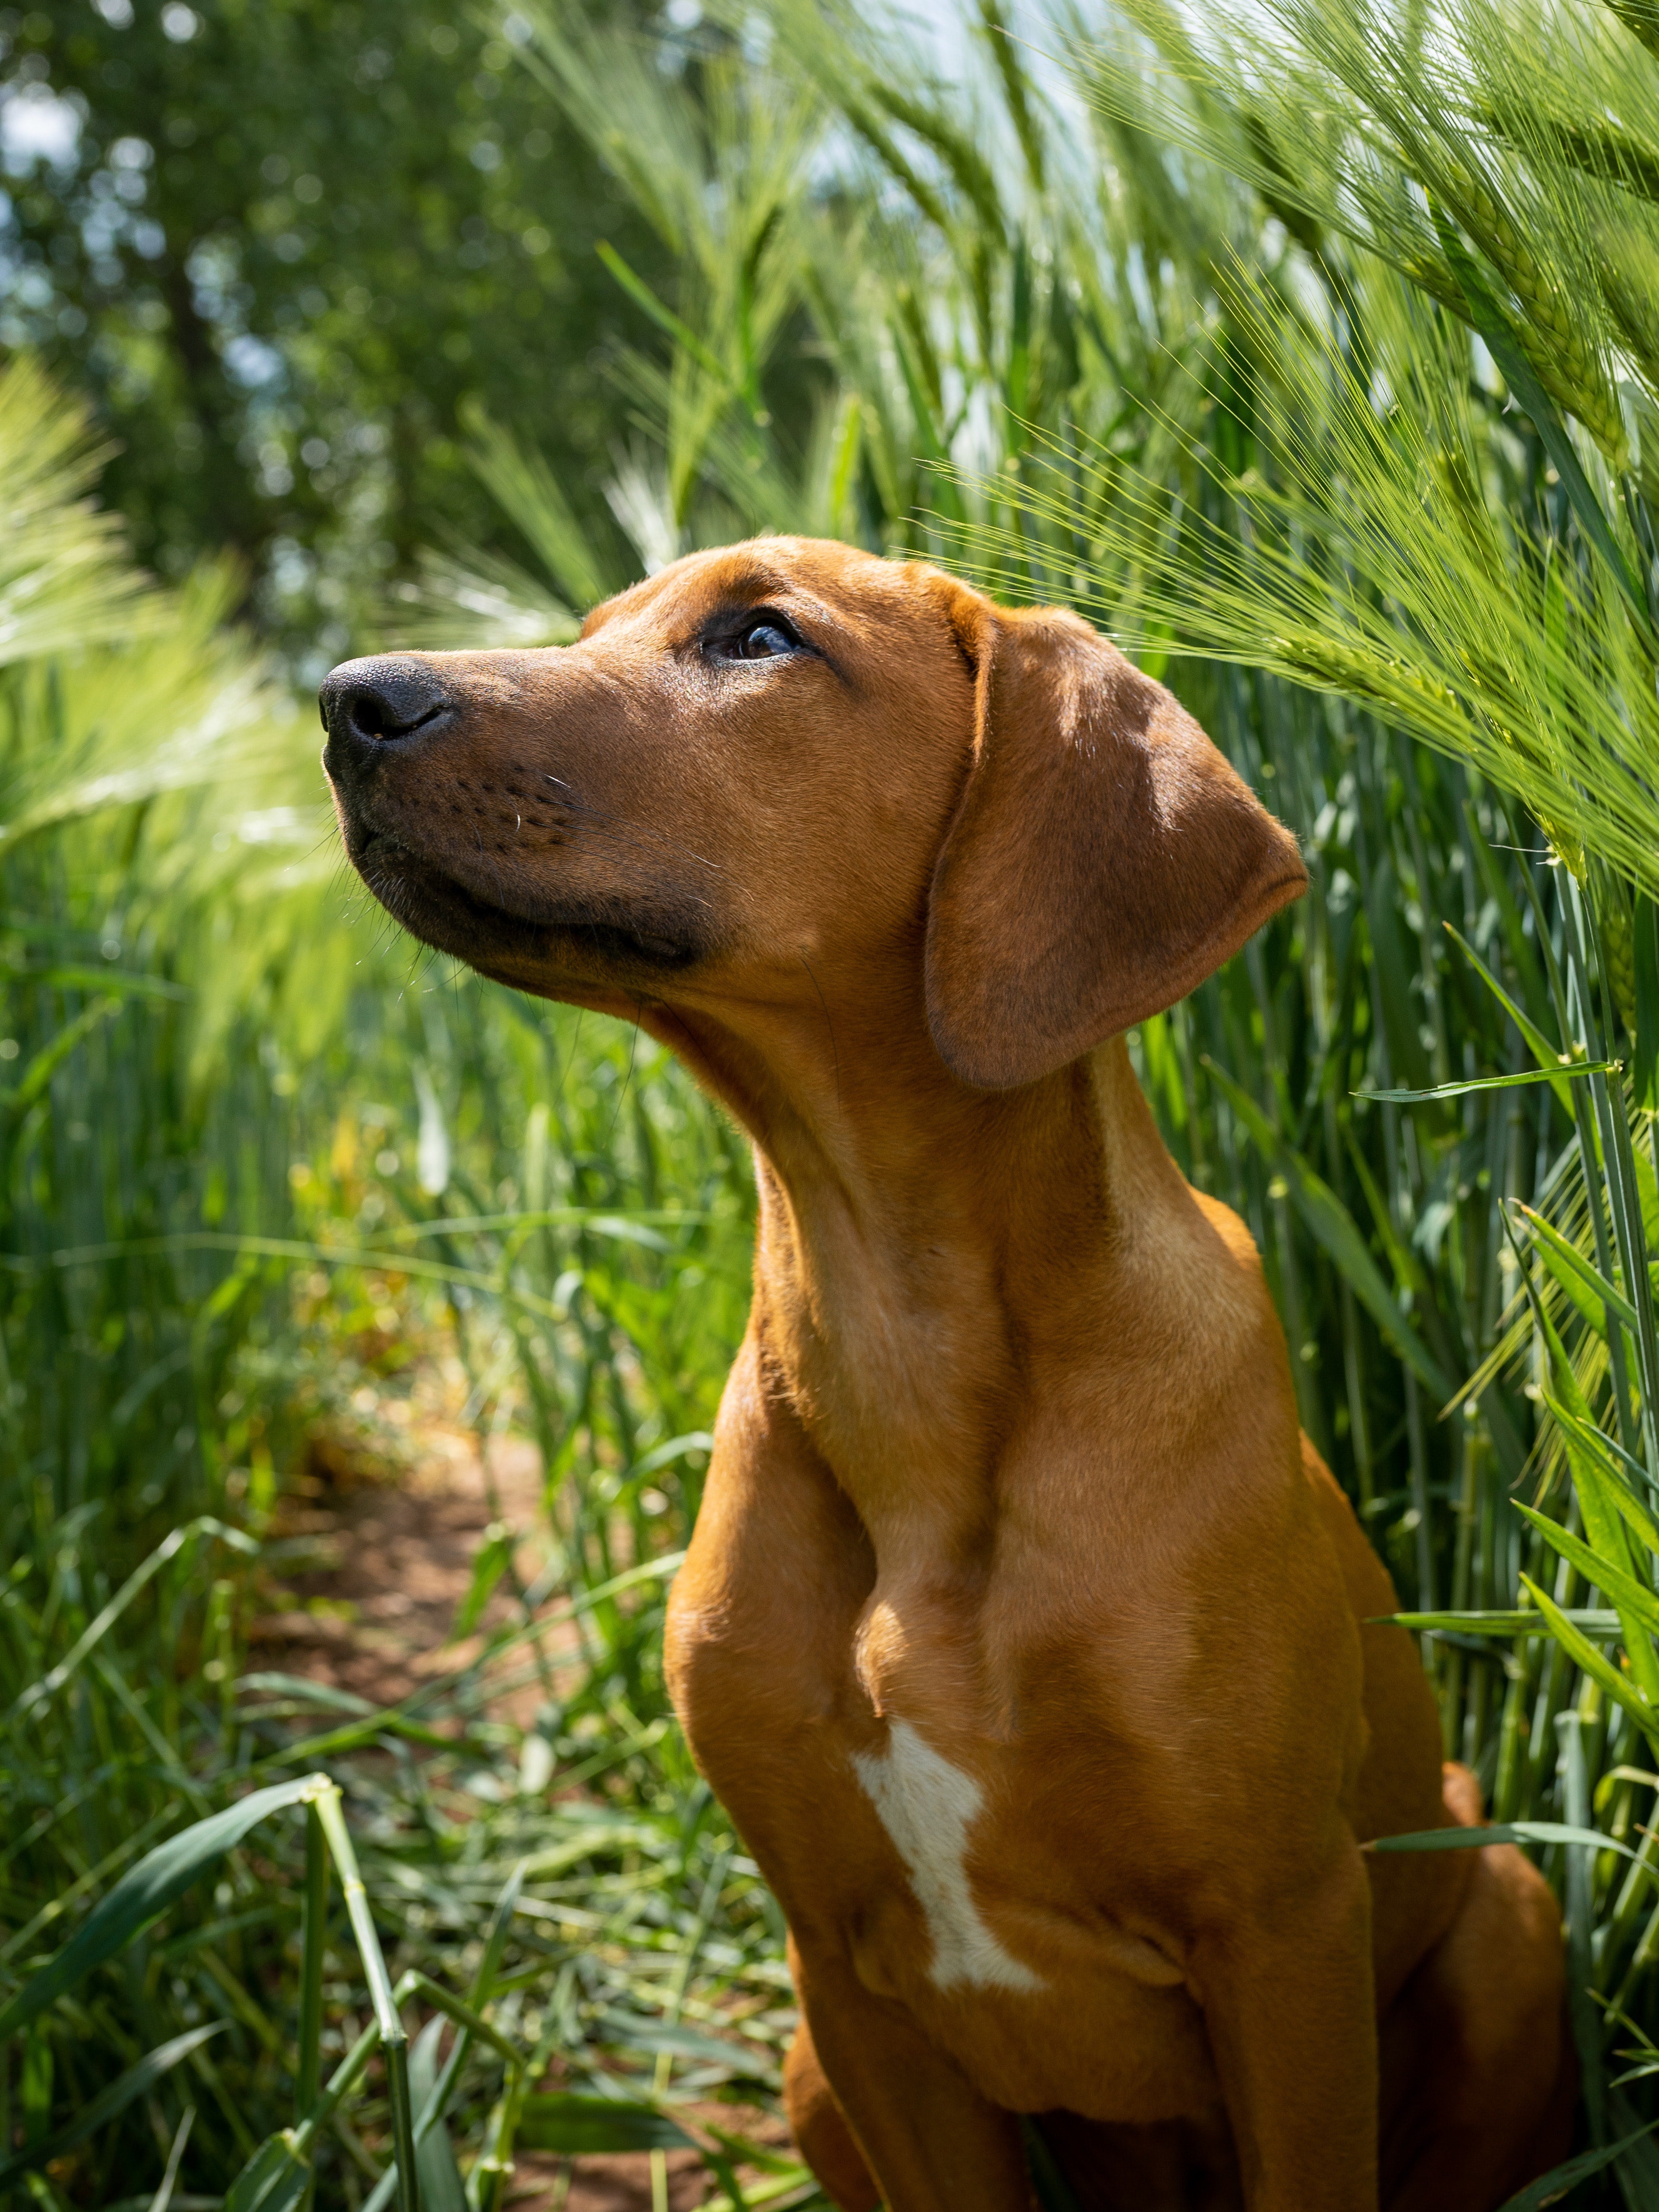 are lemongrass plants safe for dogs